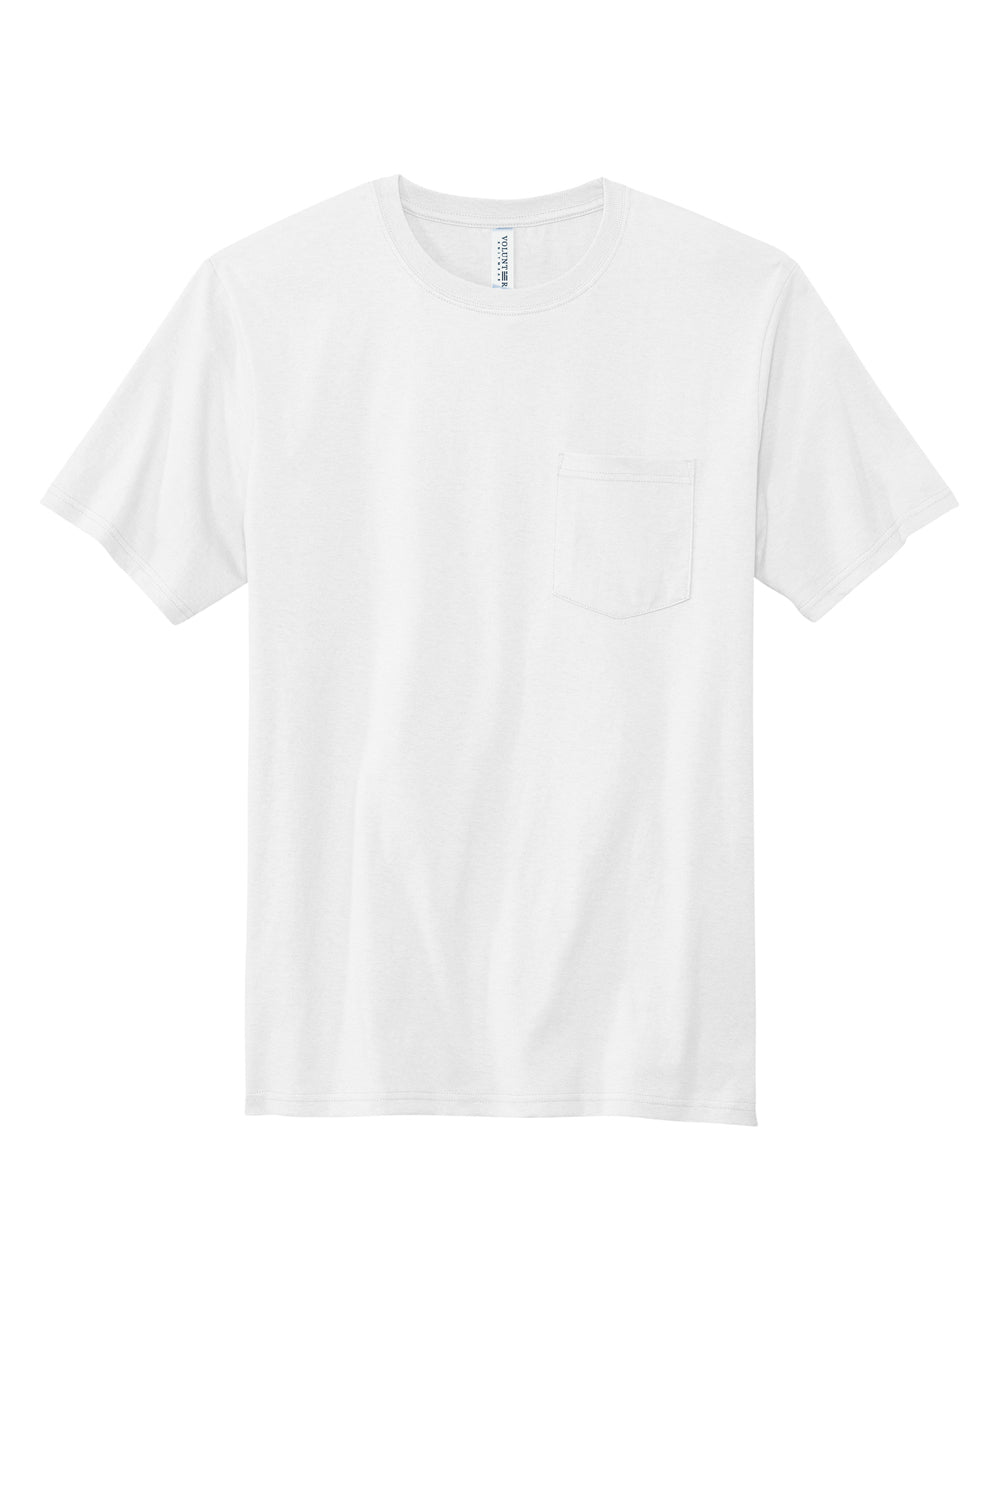 Volunteer Knitwear VL100P USA Made All American Short Sleeve Crewneck T-Shirt w/ Pocket White Flat Front